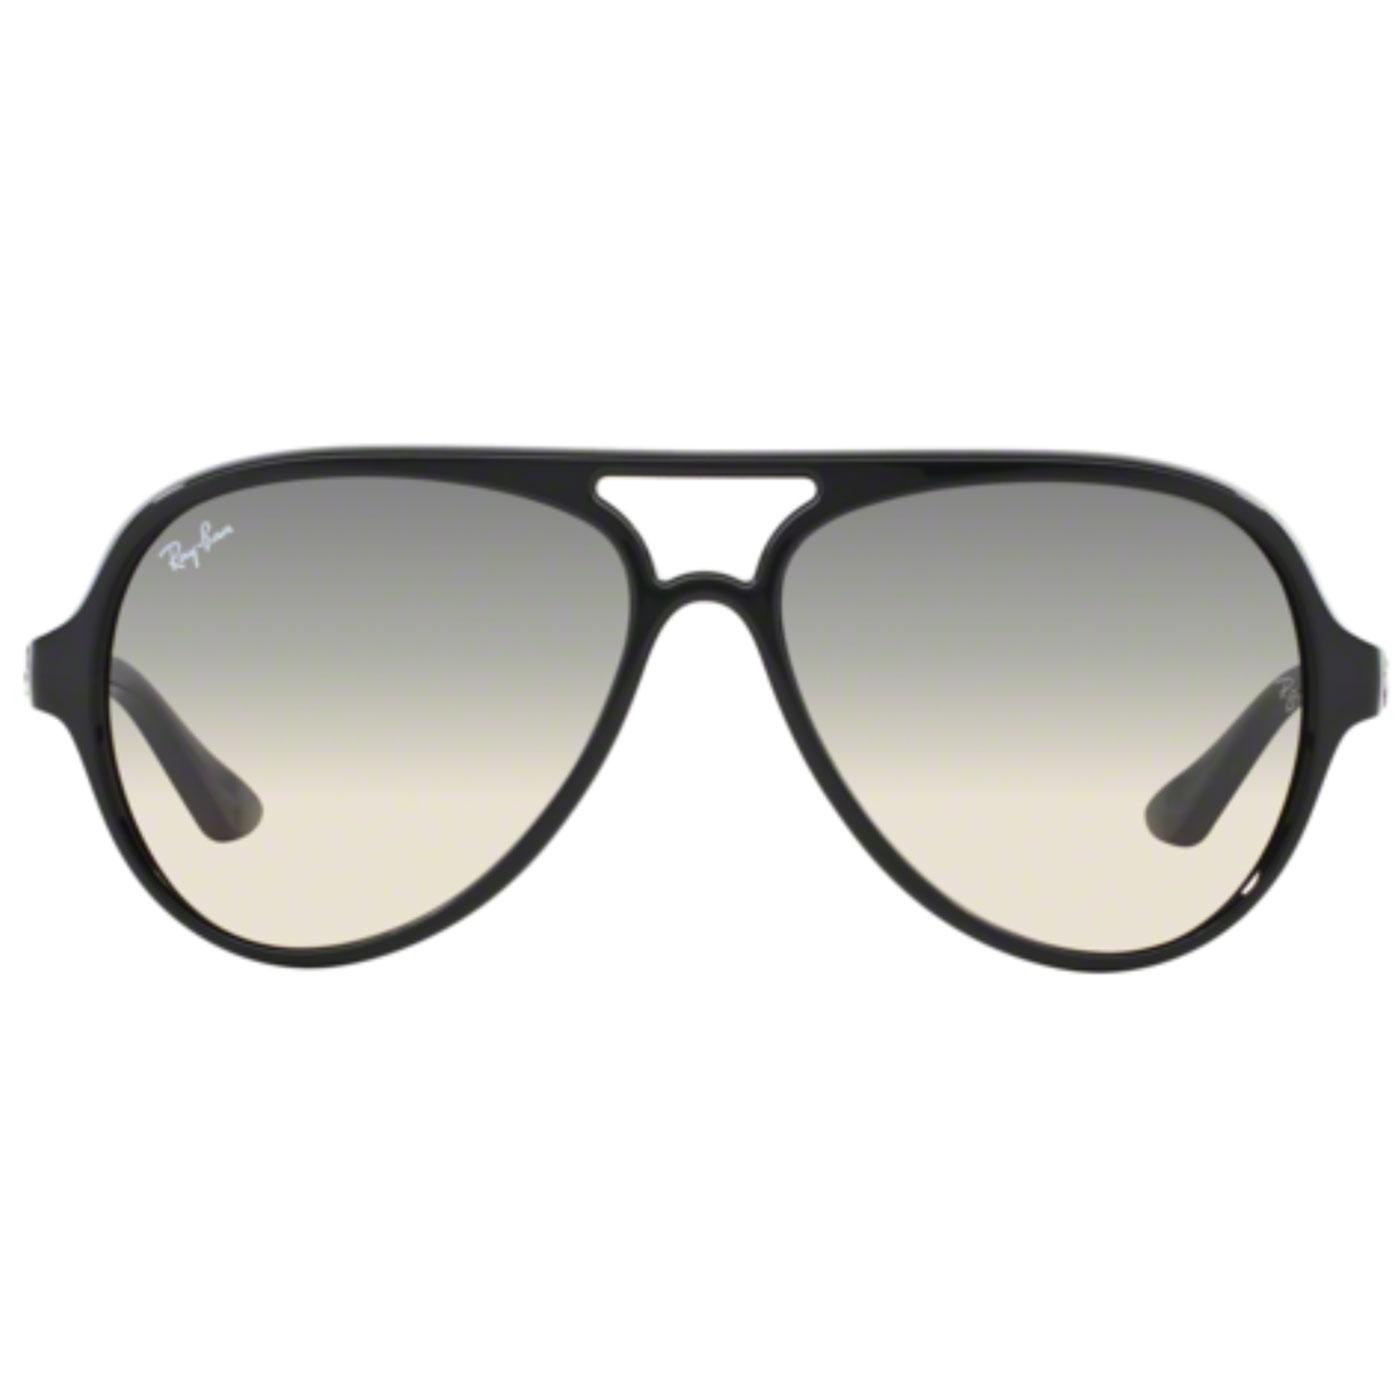 Cats 5000 Ray-Ban Retro Mod Aviator Sunglasses Blk